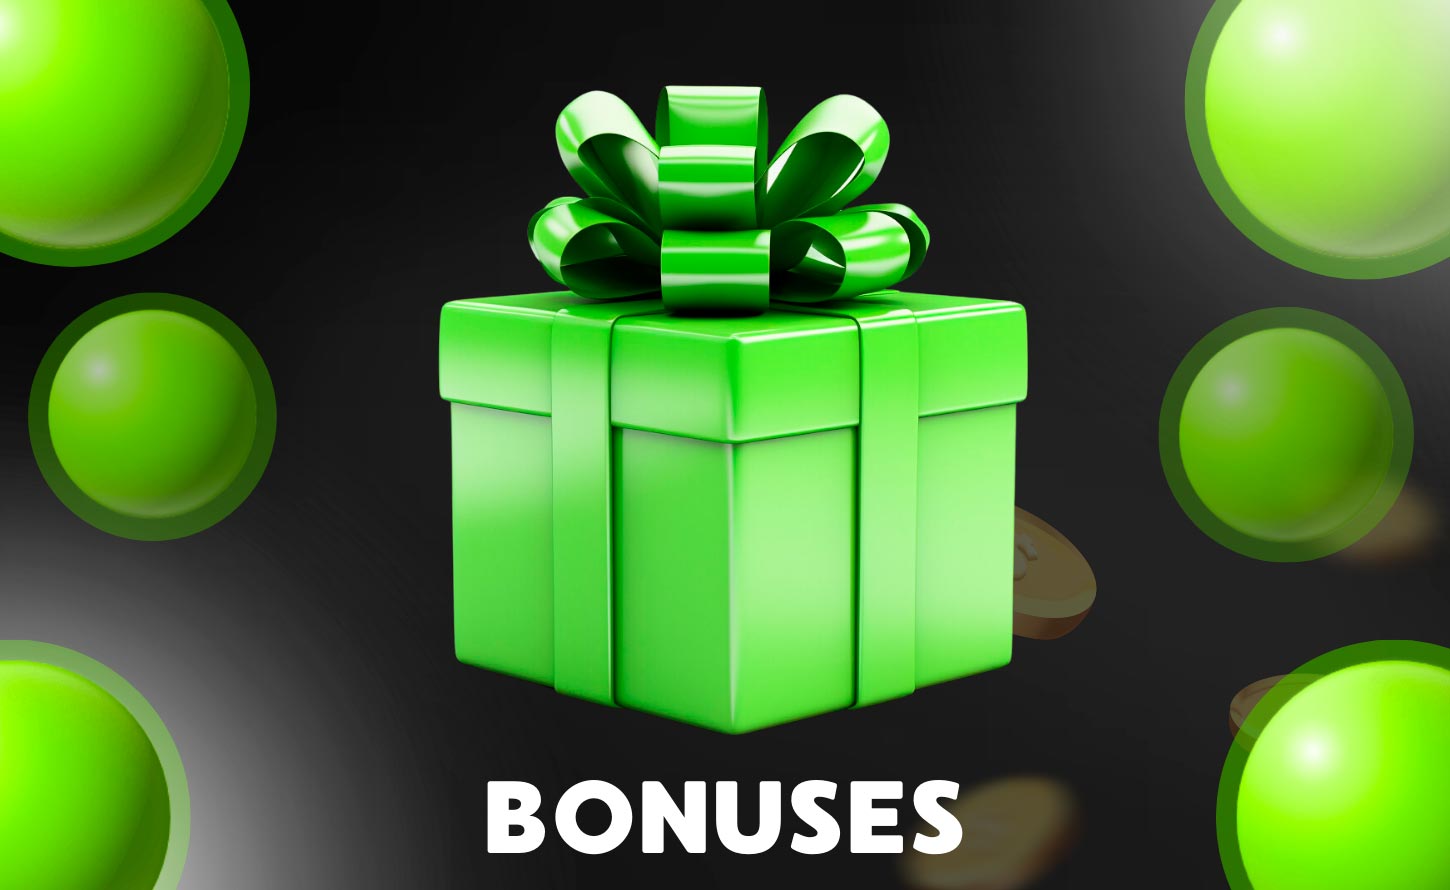 Winwin Bonuses - Claim Your Bonus Today!